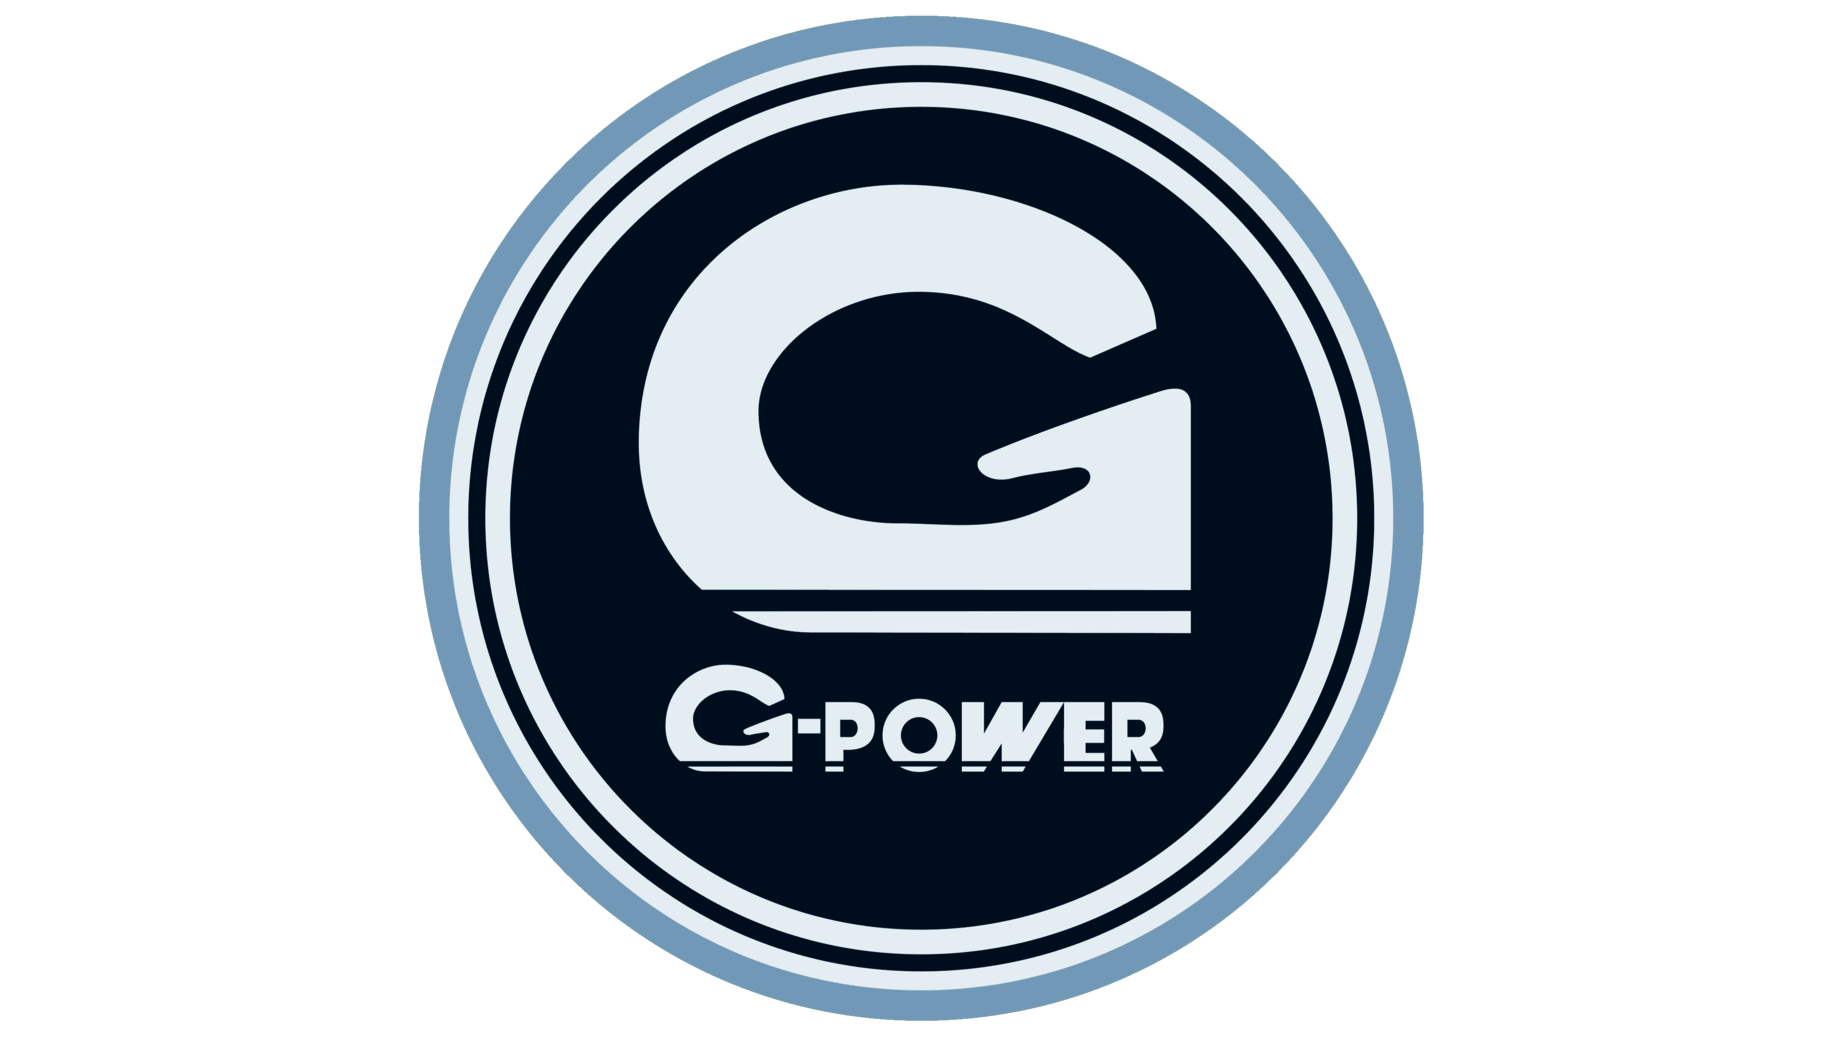 G power sign